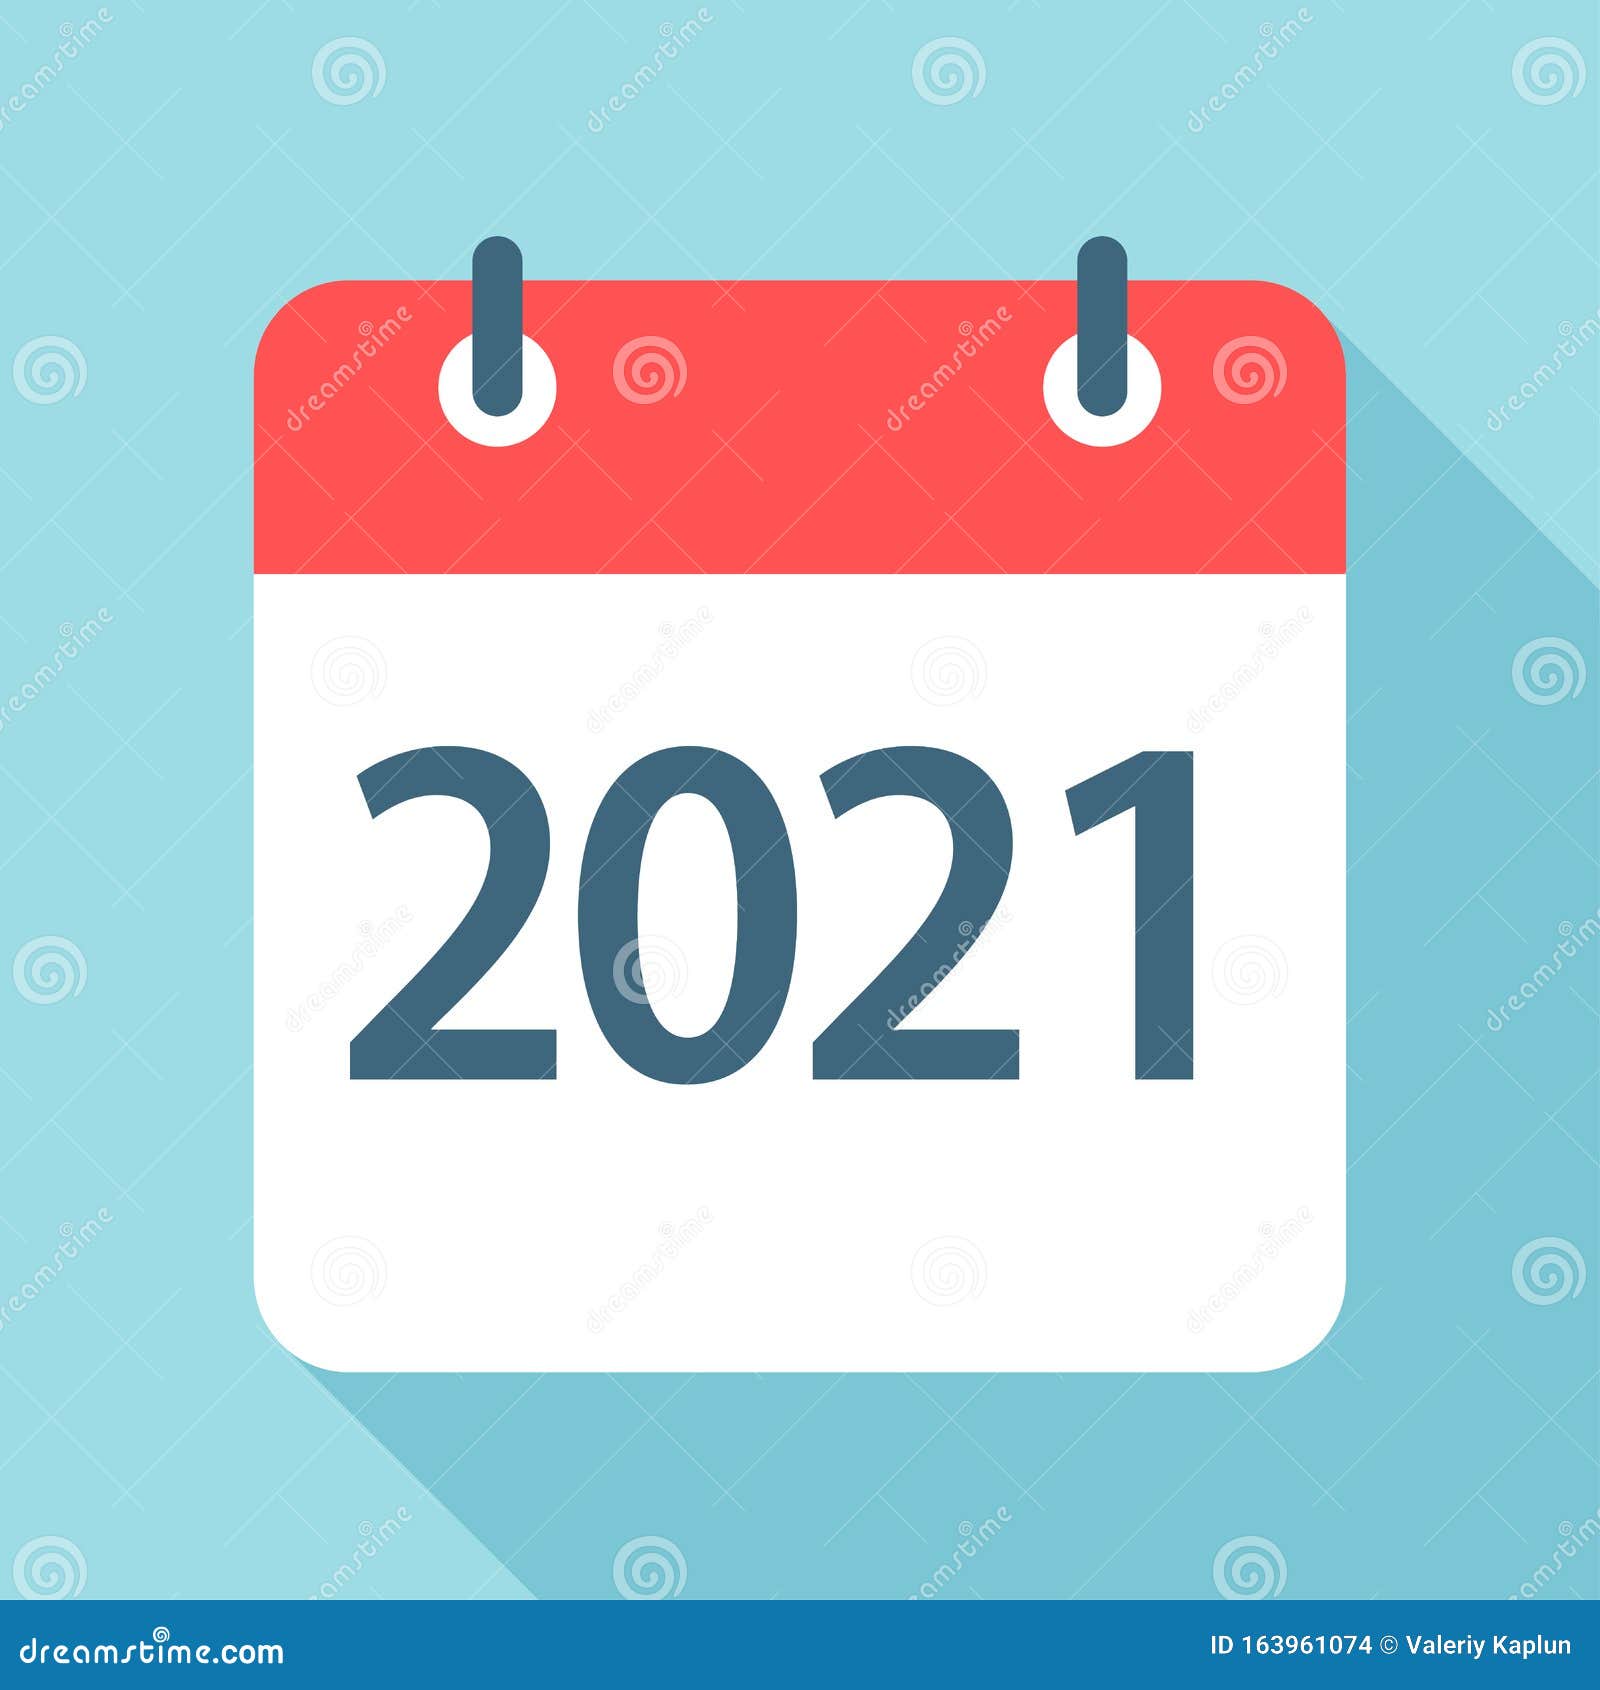 2021 calendar icon 2021 Year Calendar Leaf Icon Vector Illustration Stock Illustration Illustration Of Illustration Template 163961074 2021 calendar icon